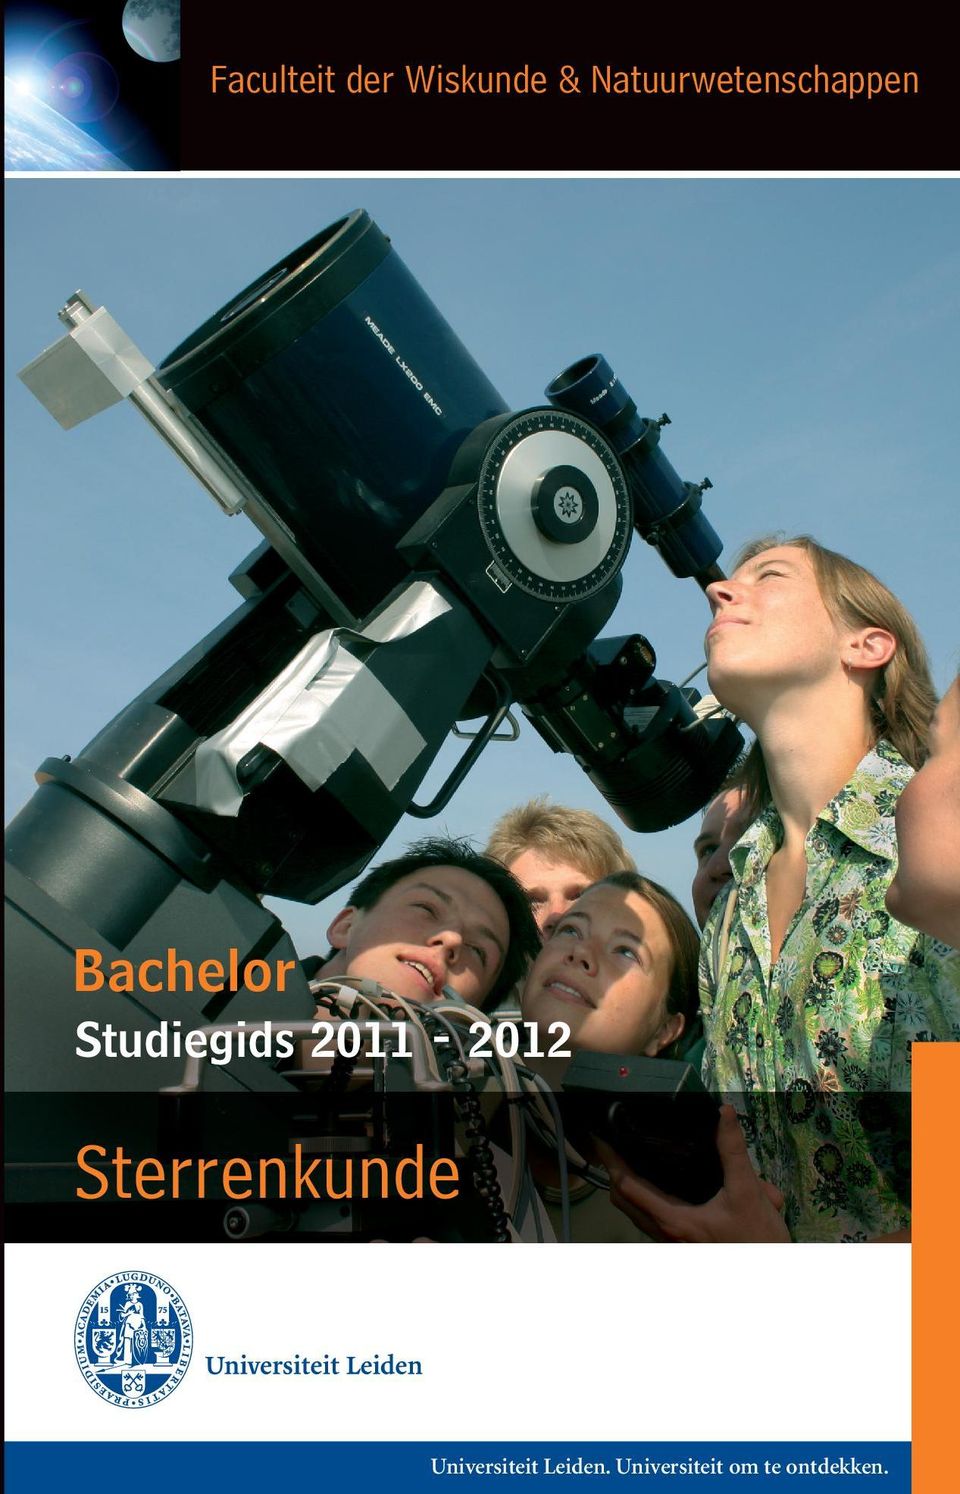 Studiegids 2011-2012 Sterrenkunde